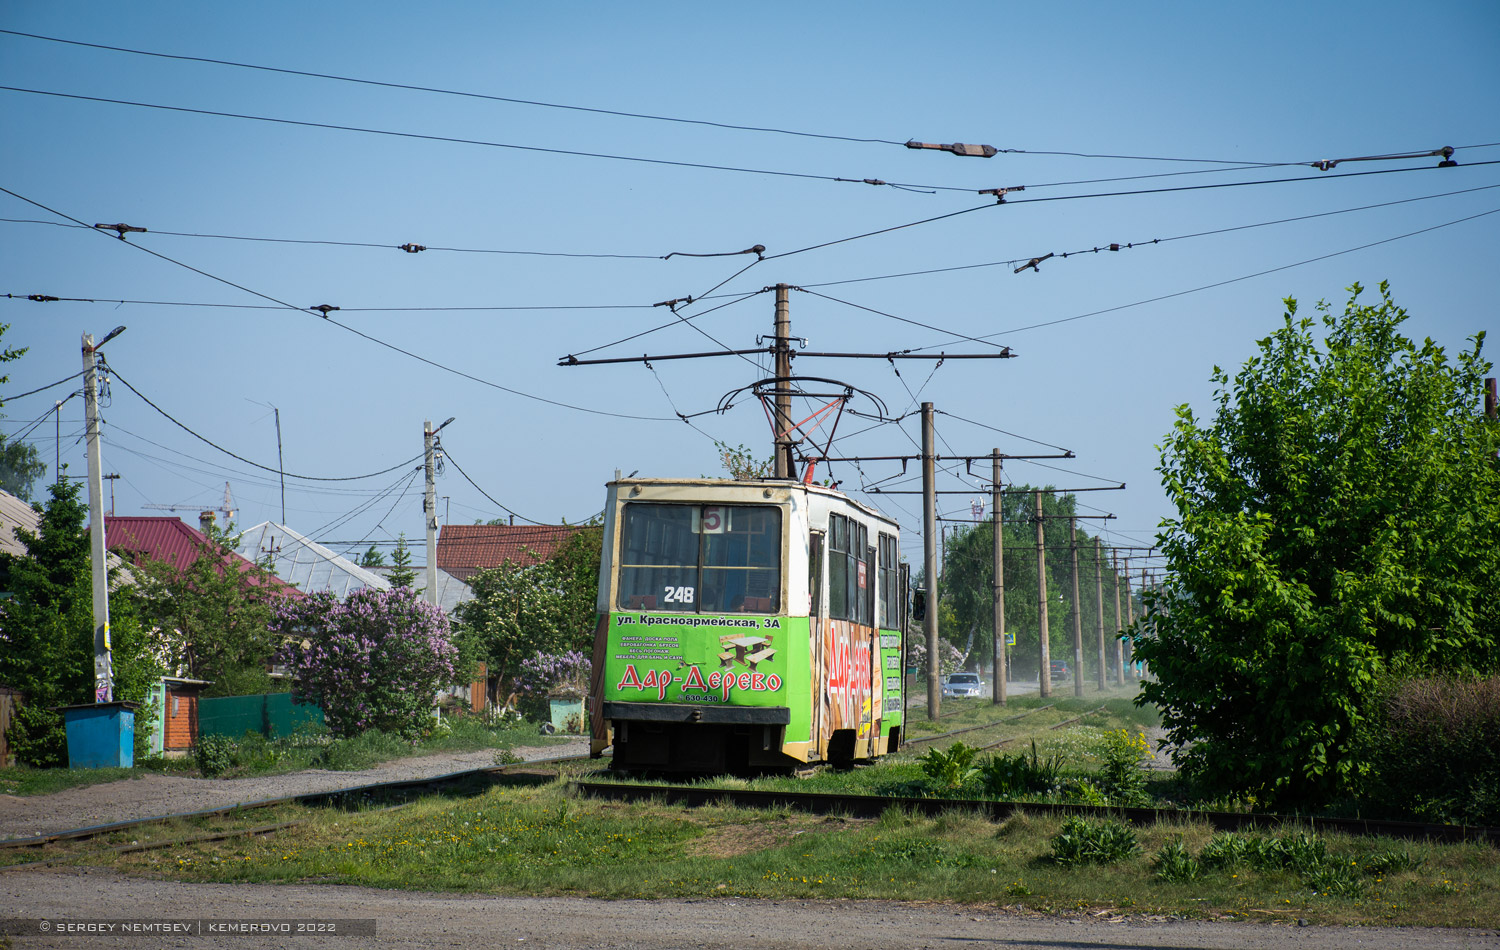 Kemerovo, 71-605 (KTM-5M3) č. 248